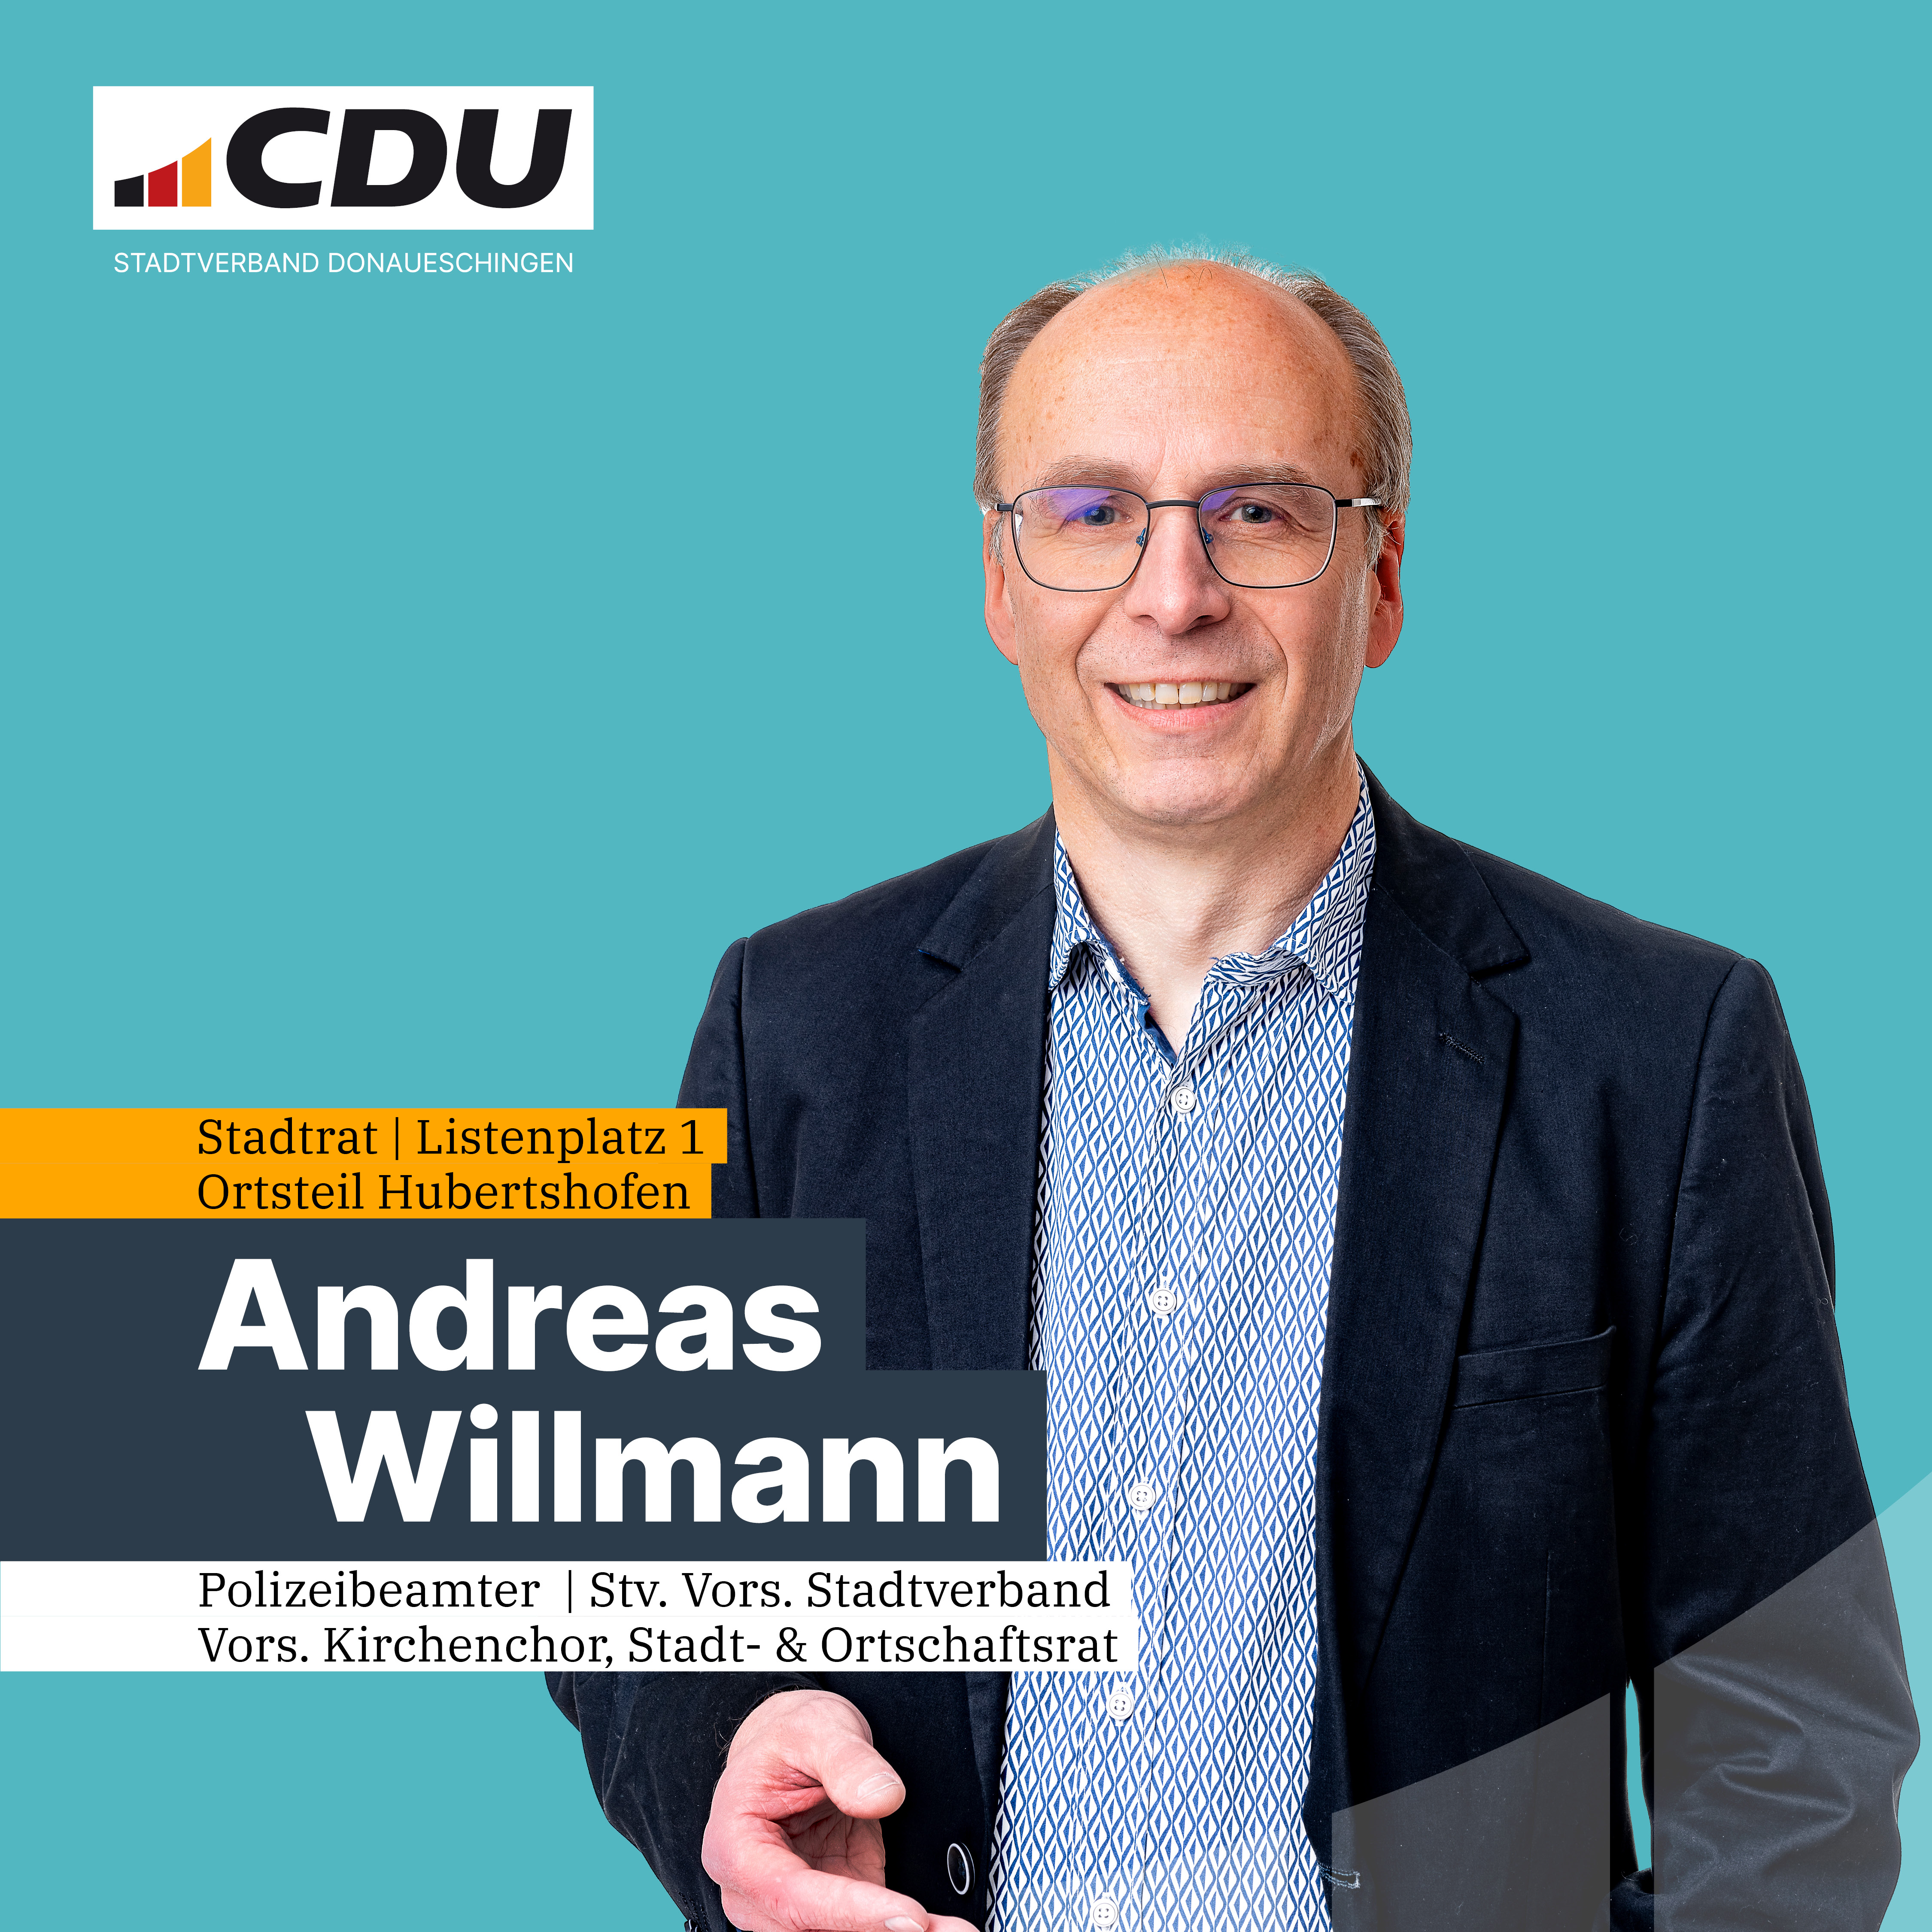  Andreas Willmann